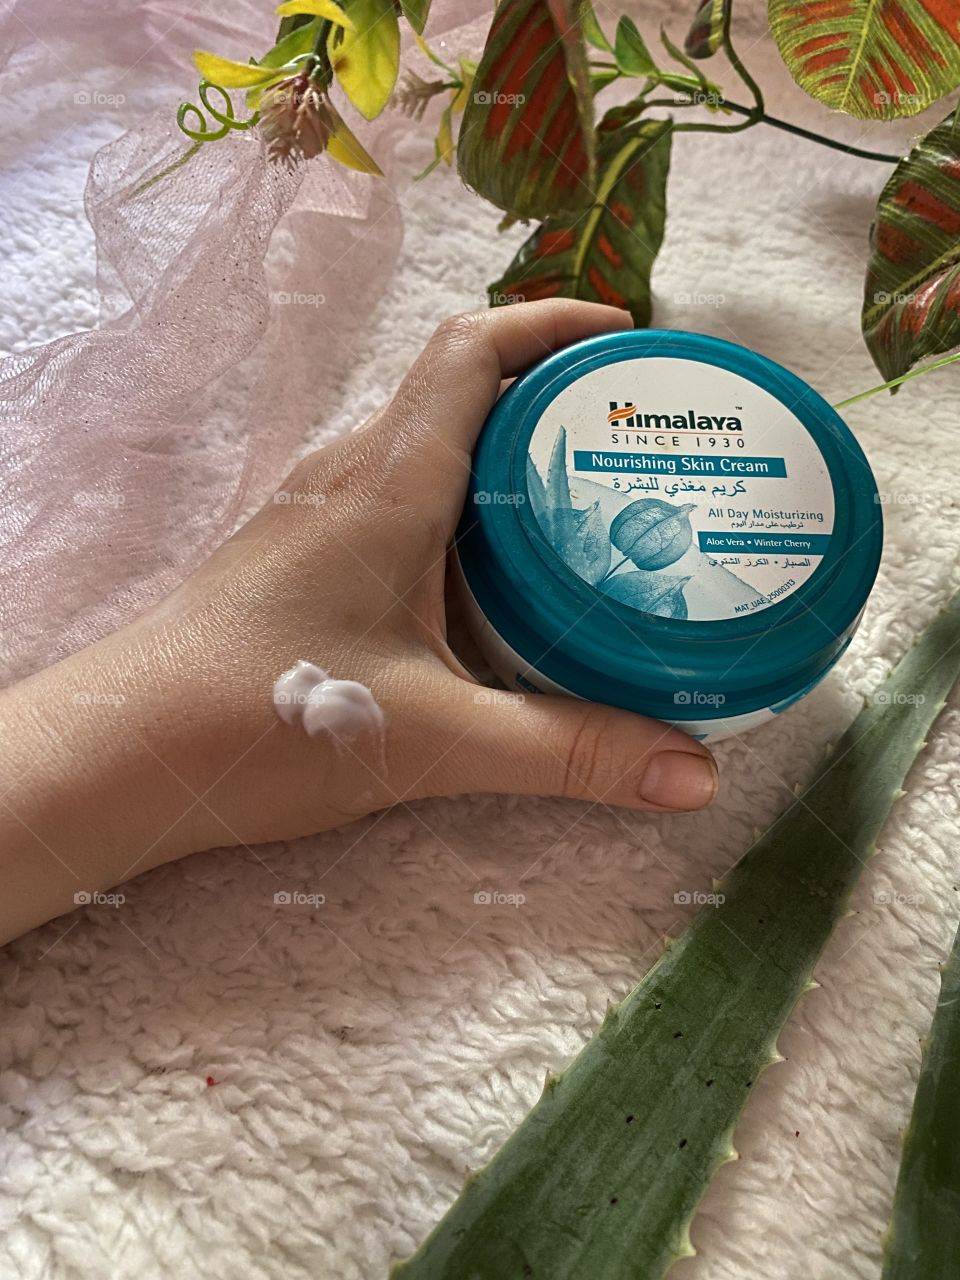 Skin care and nourishing with Himalaya cream